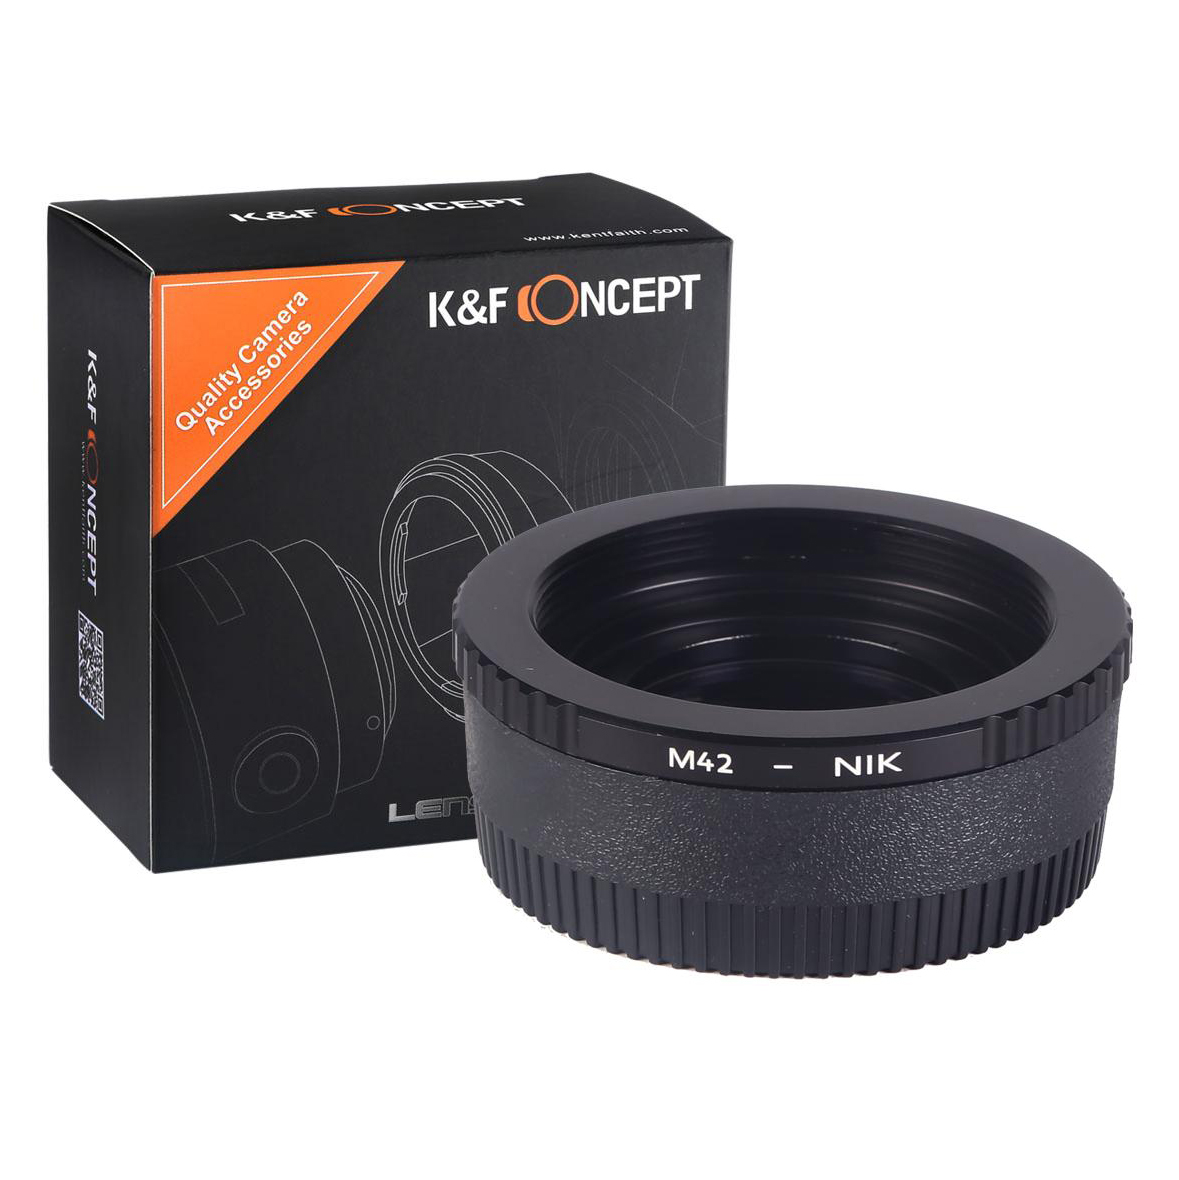 Adaptador manual K&F M42-NIK, lentes M42 en cámaras Nikon F